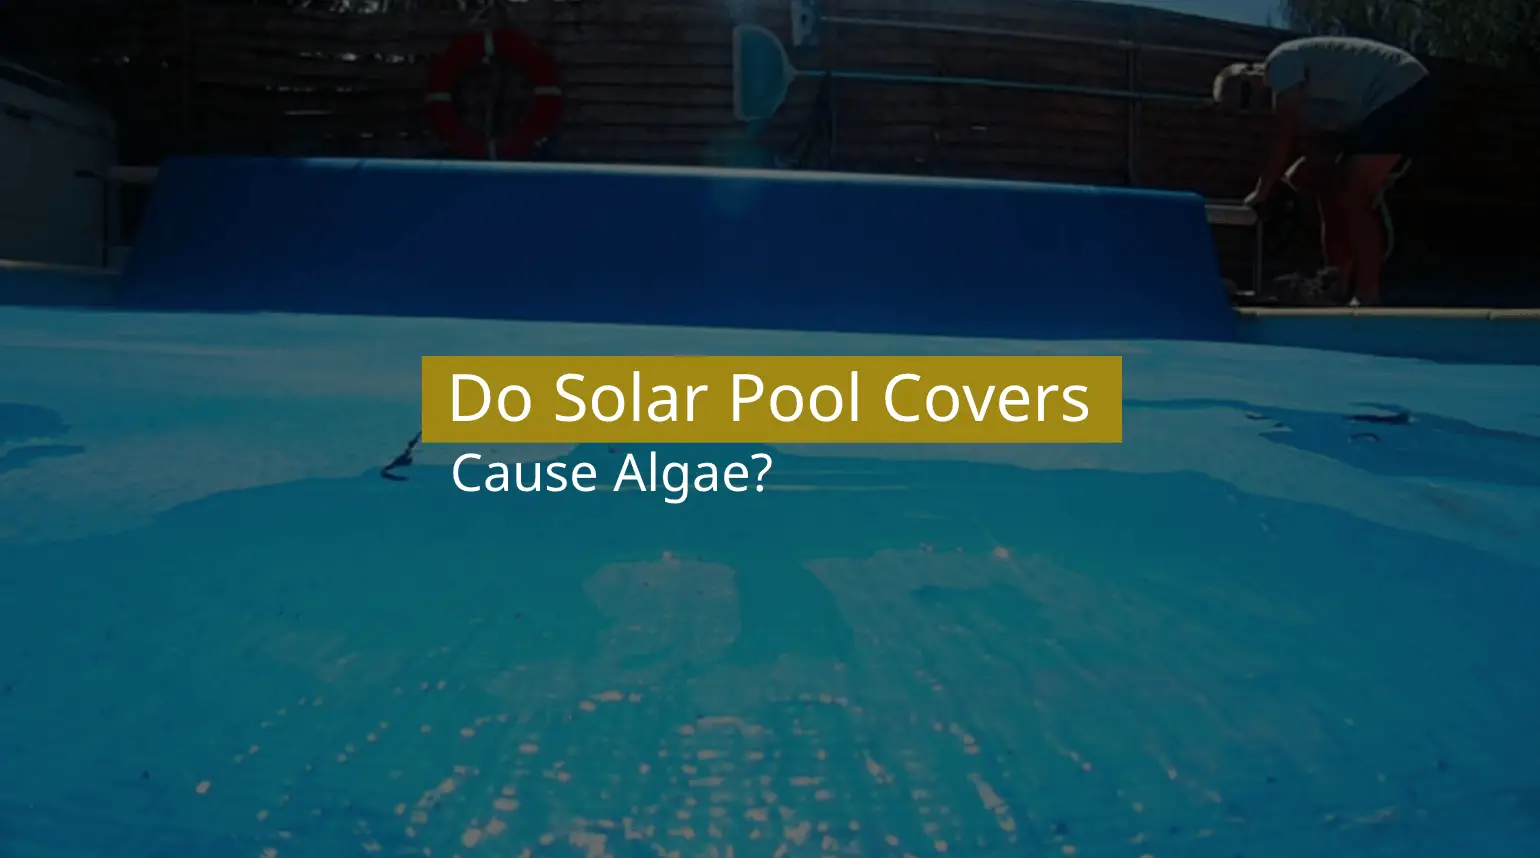 Do Solar Pool Covers Cause Algae?